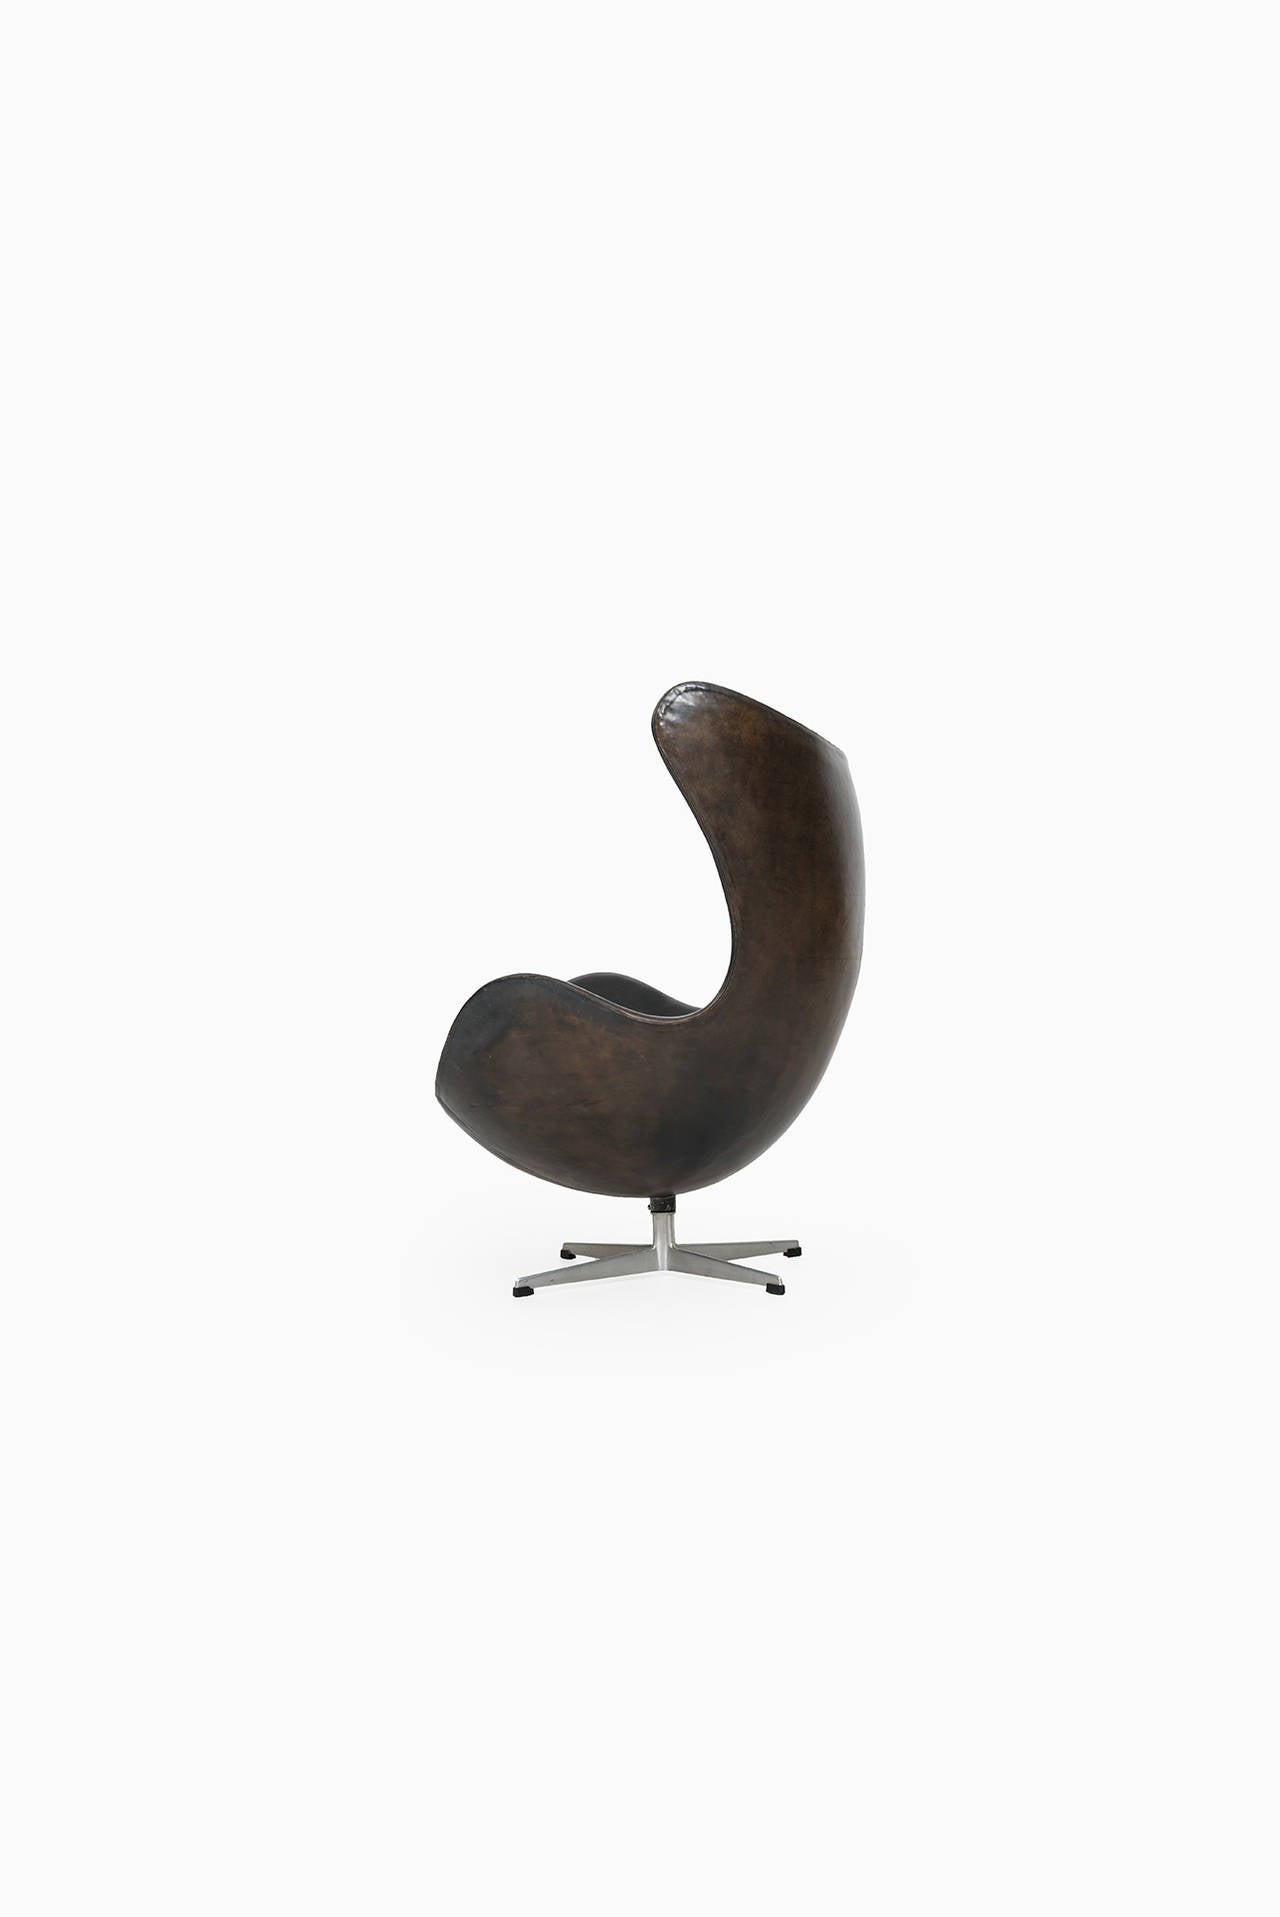 Arne Jacobsen Early Egg Chair in Original Black Leather by Fritz Hansen 1